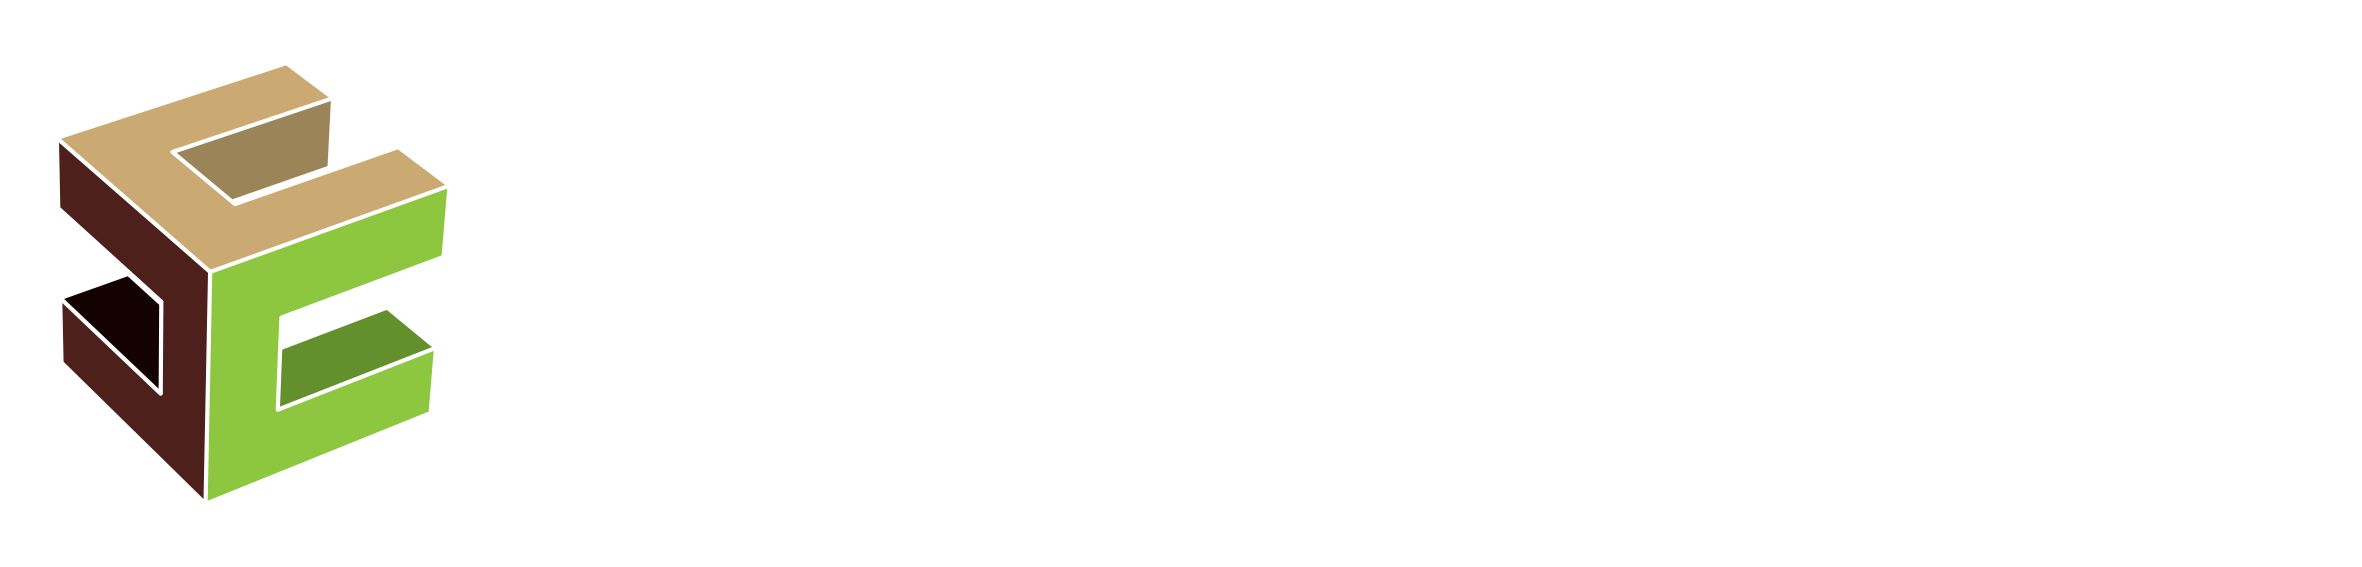 Centofanti Design & Construct Logo